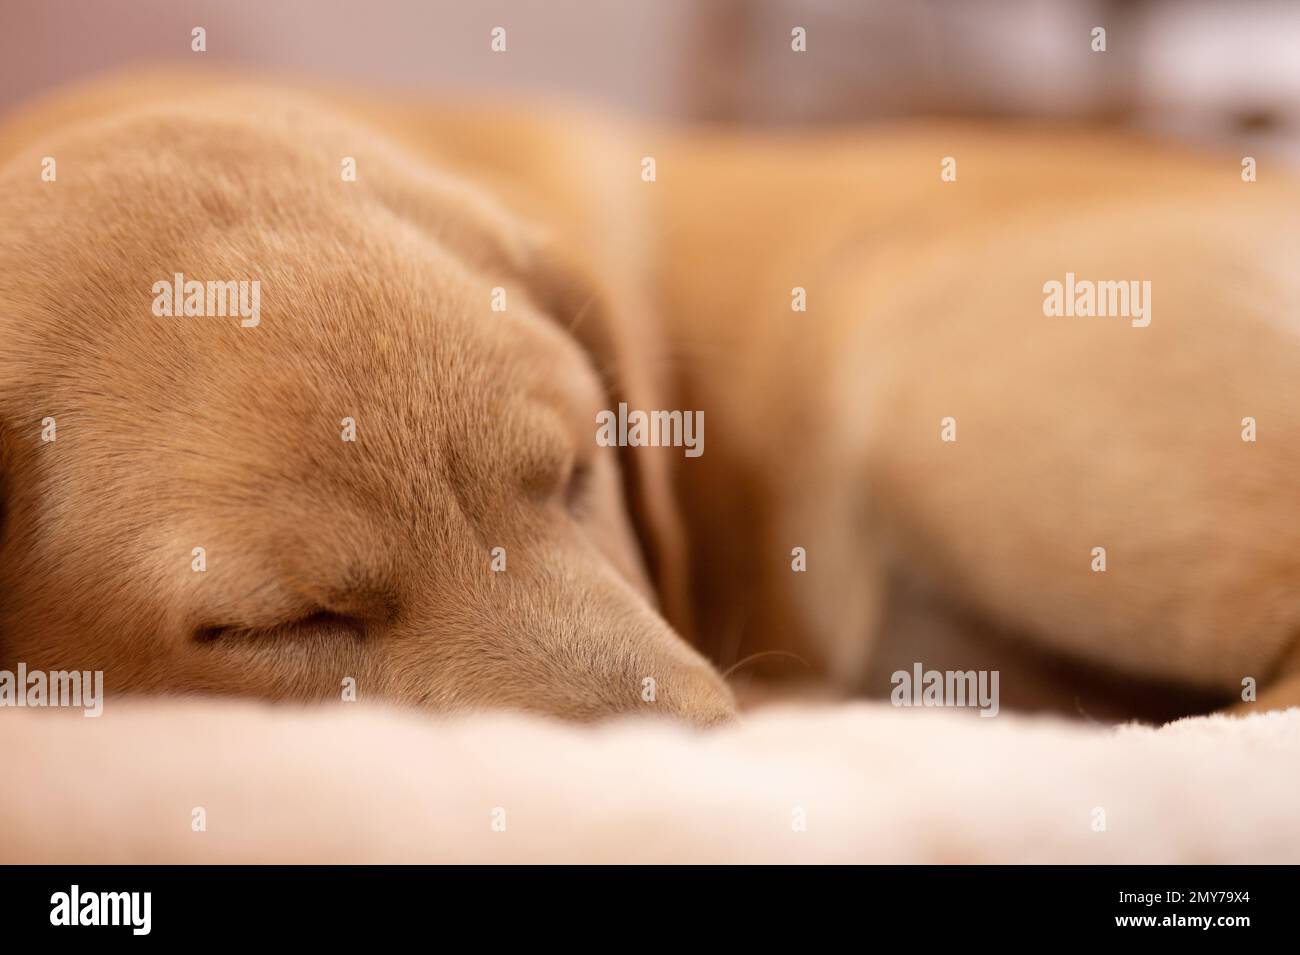 Sleeping doggy portrait on soft floor background Stock Photo